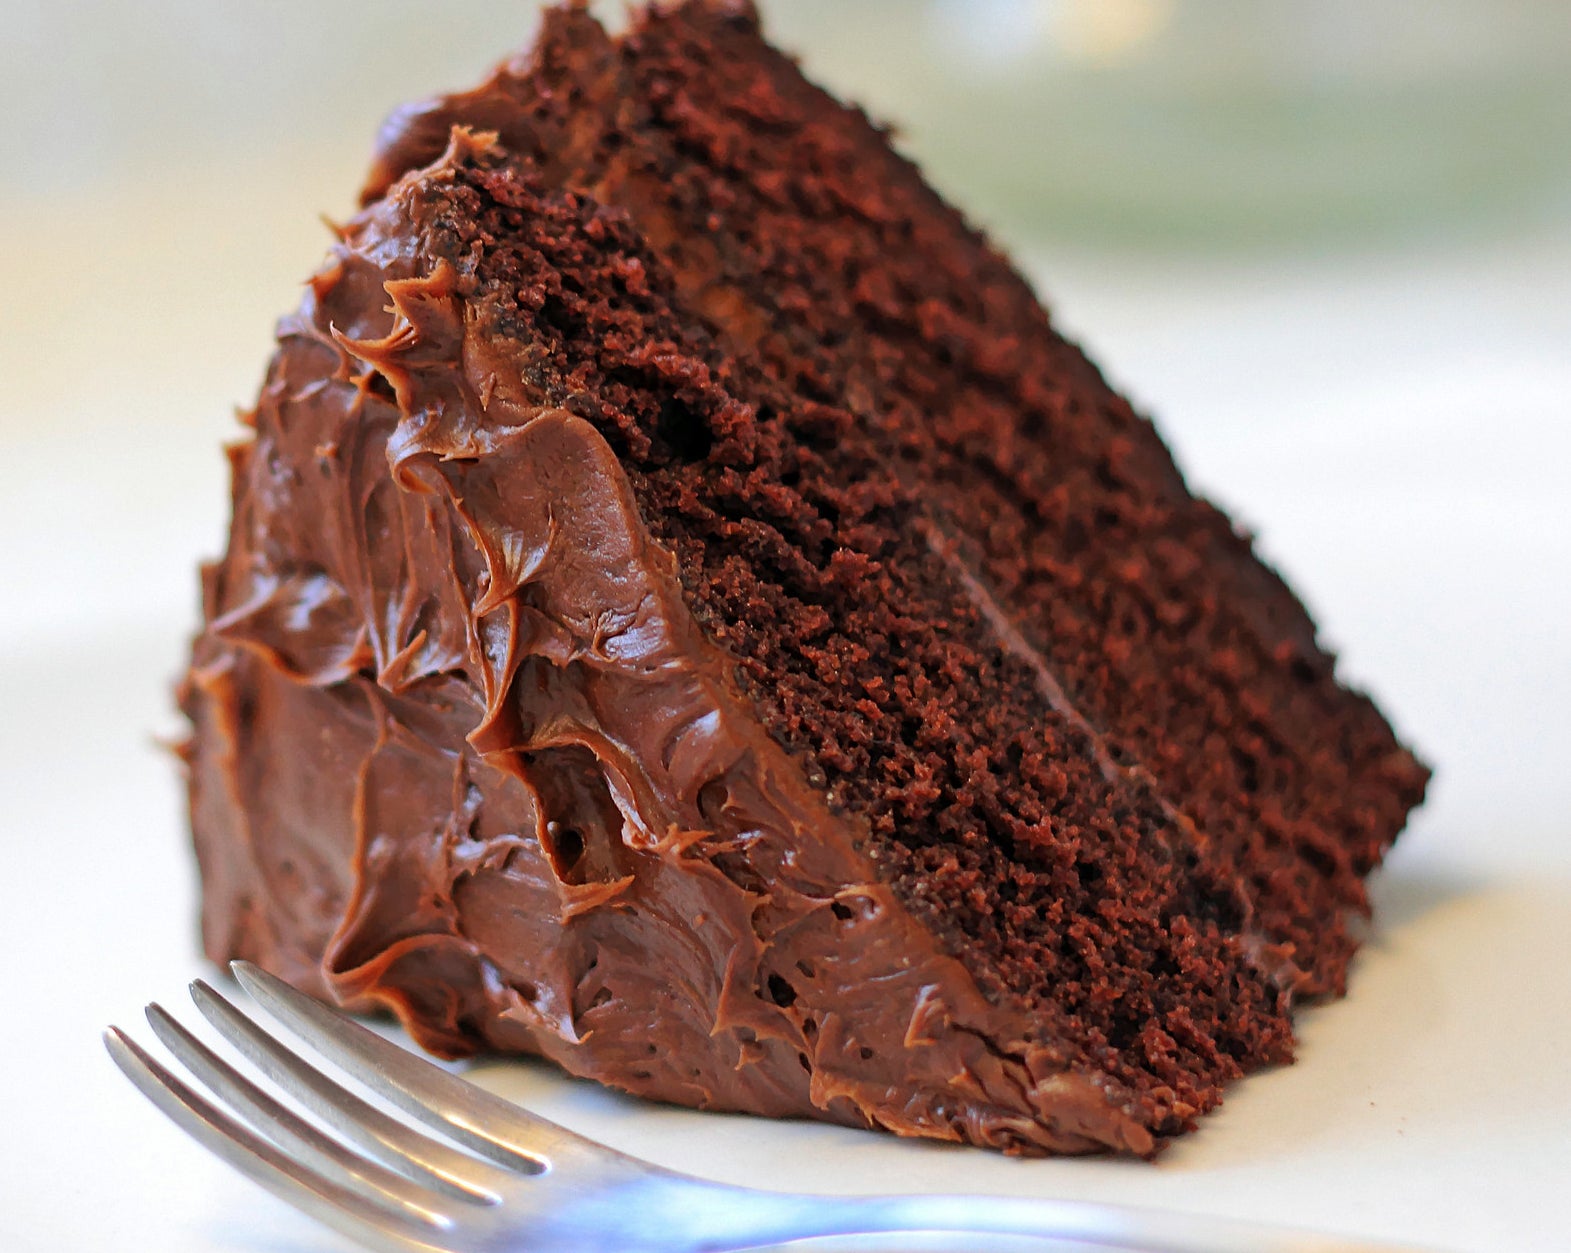 A slice of chocolate cake.